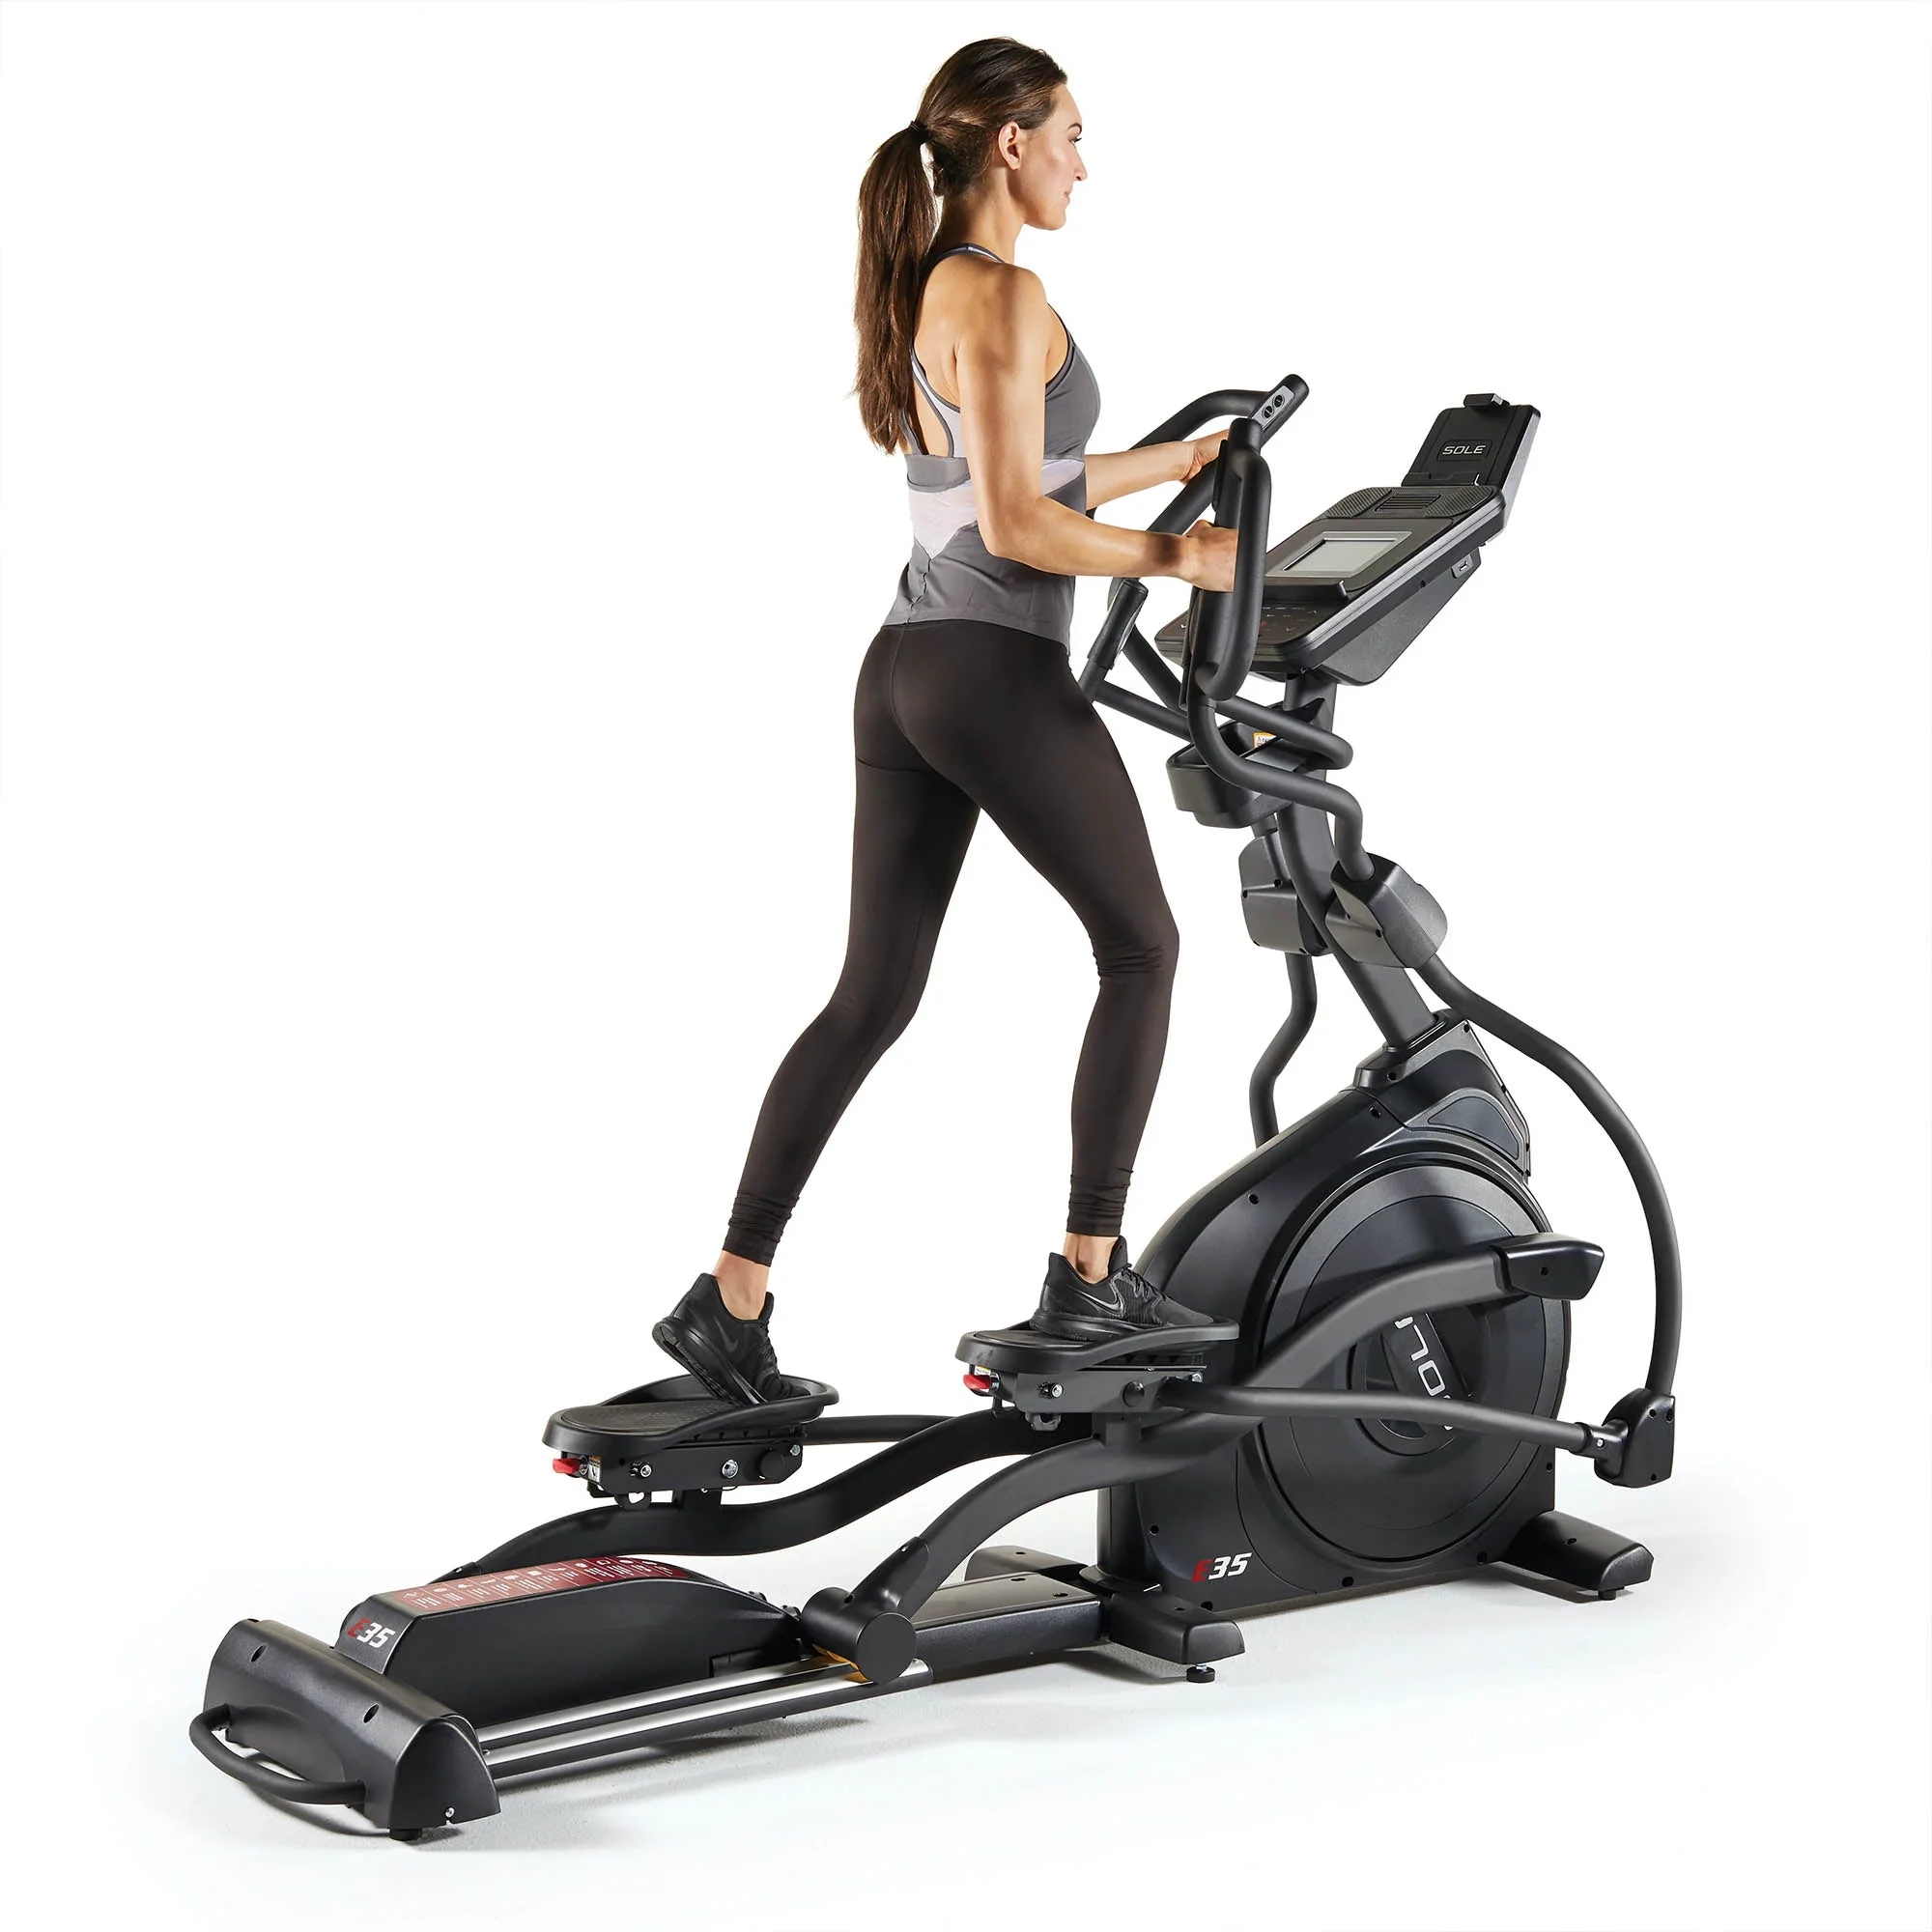 Sole Fitness E35 Elliptical Cross Trainer – Cardio machines